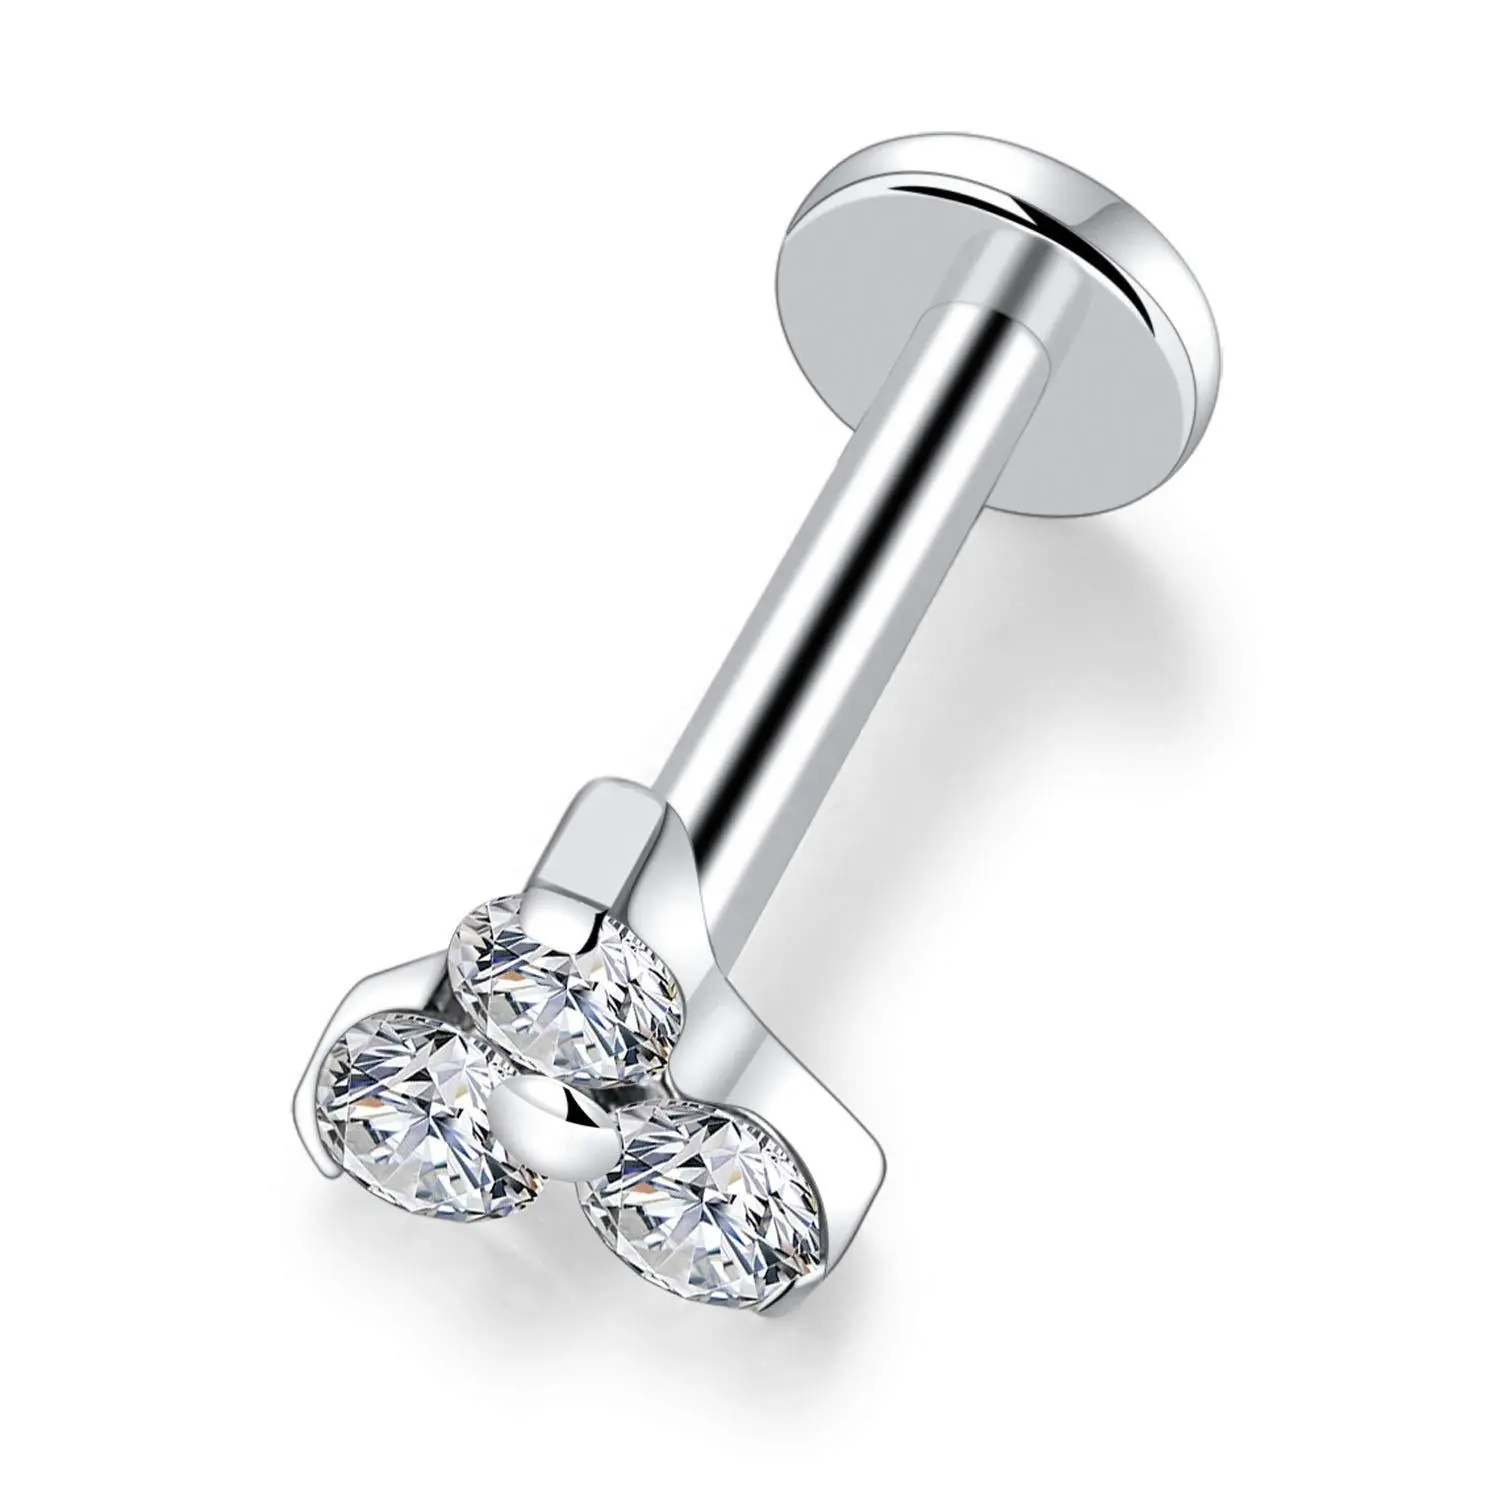 New Titanium Lip Rings Internally Threaded 3 Cz Labret Piercing Jewelry Cartilage Earring Zircon Lip Monore Stud